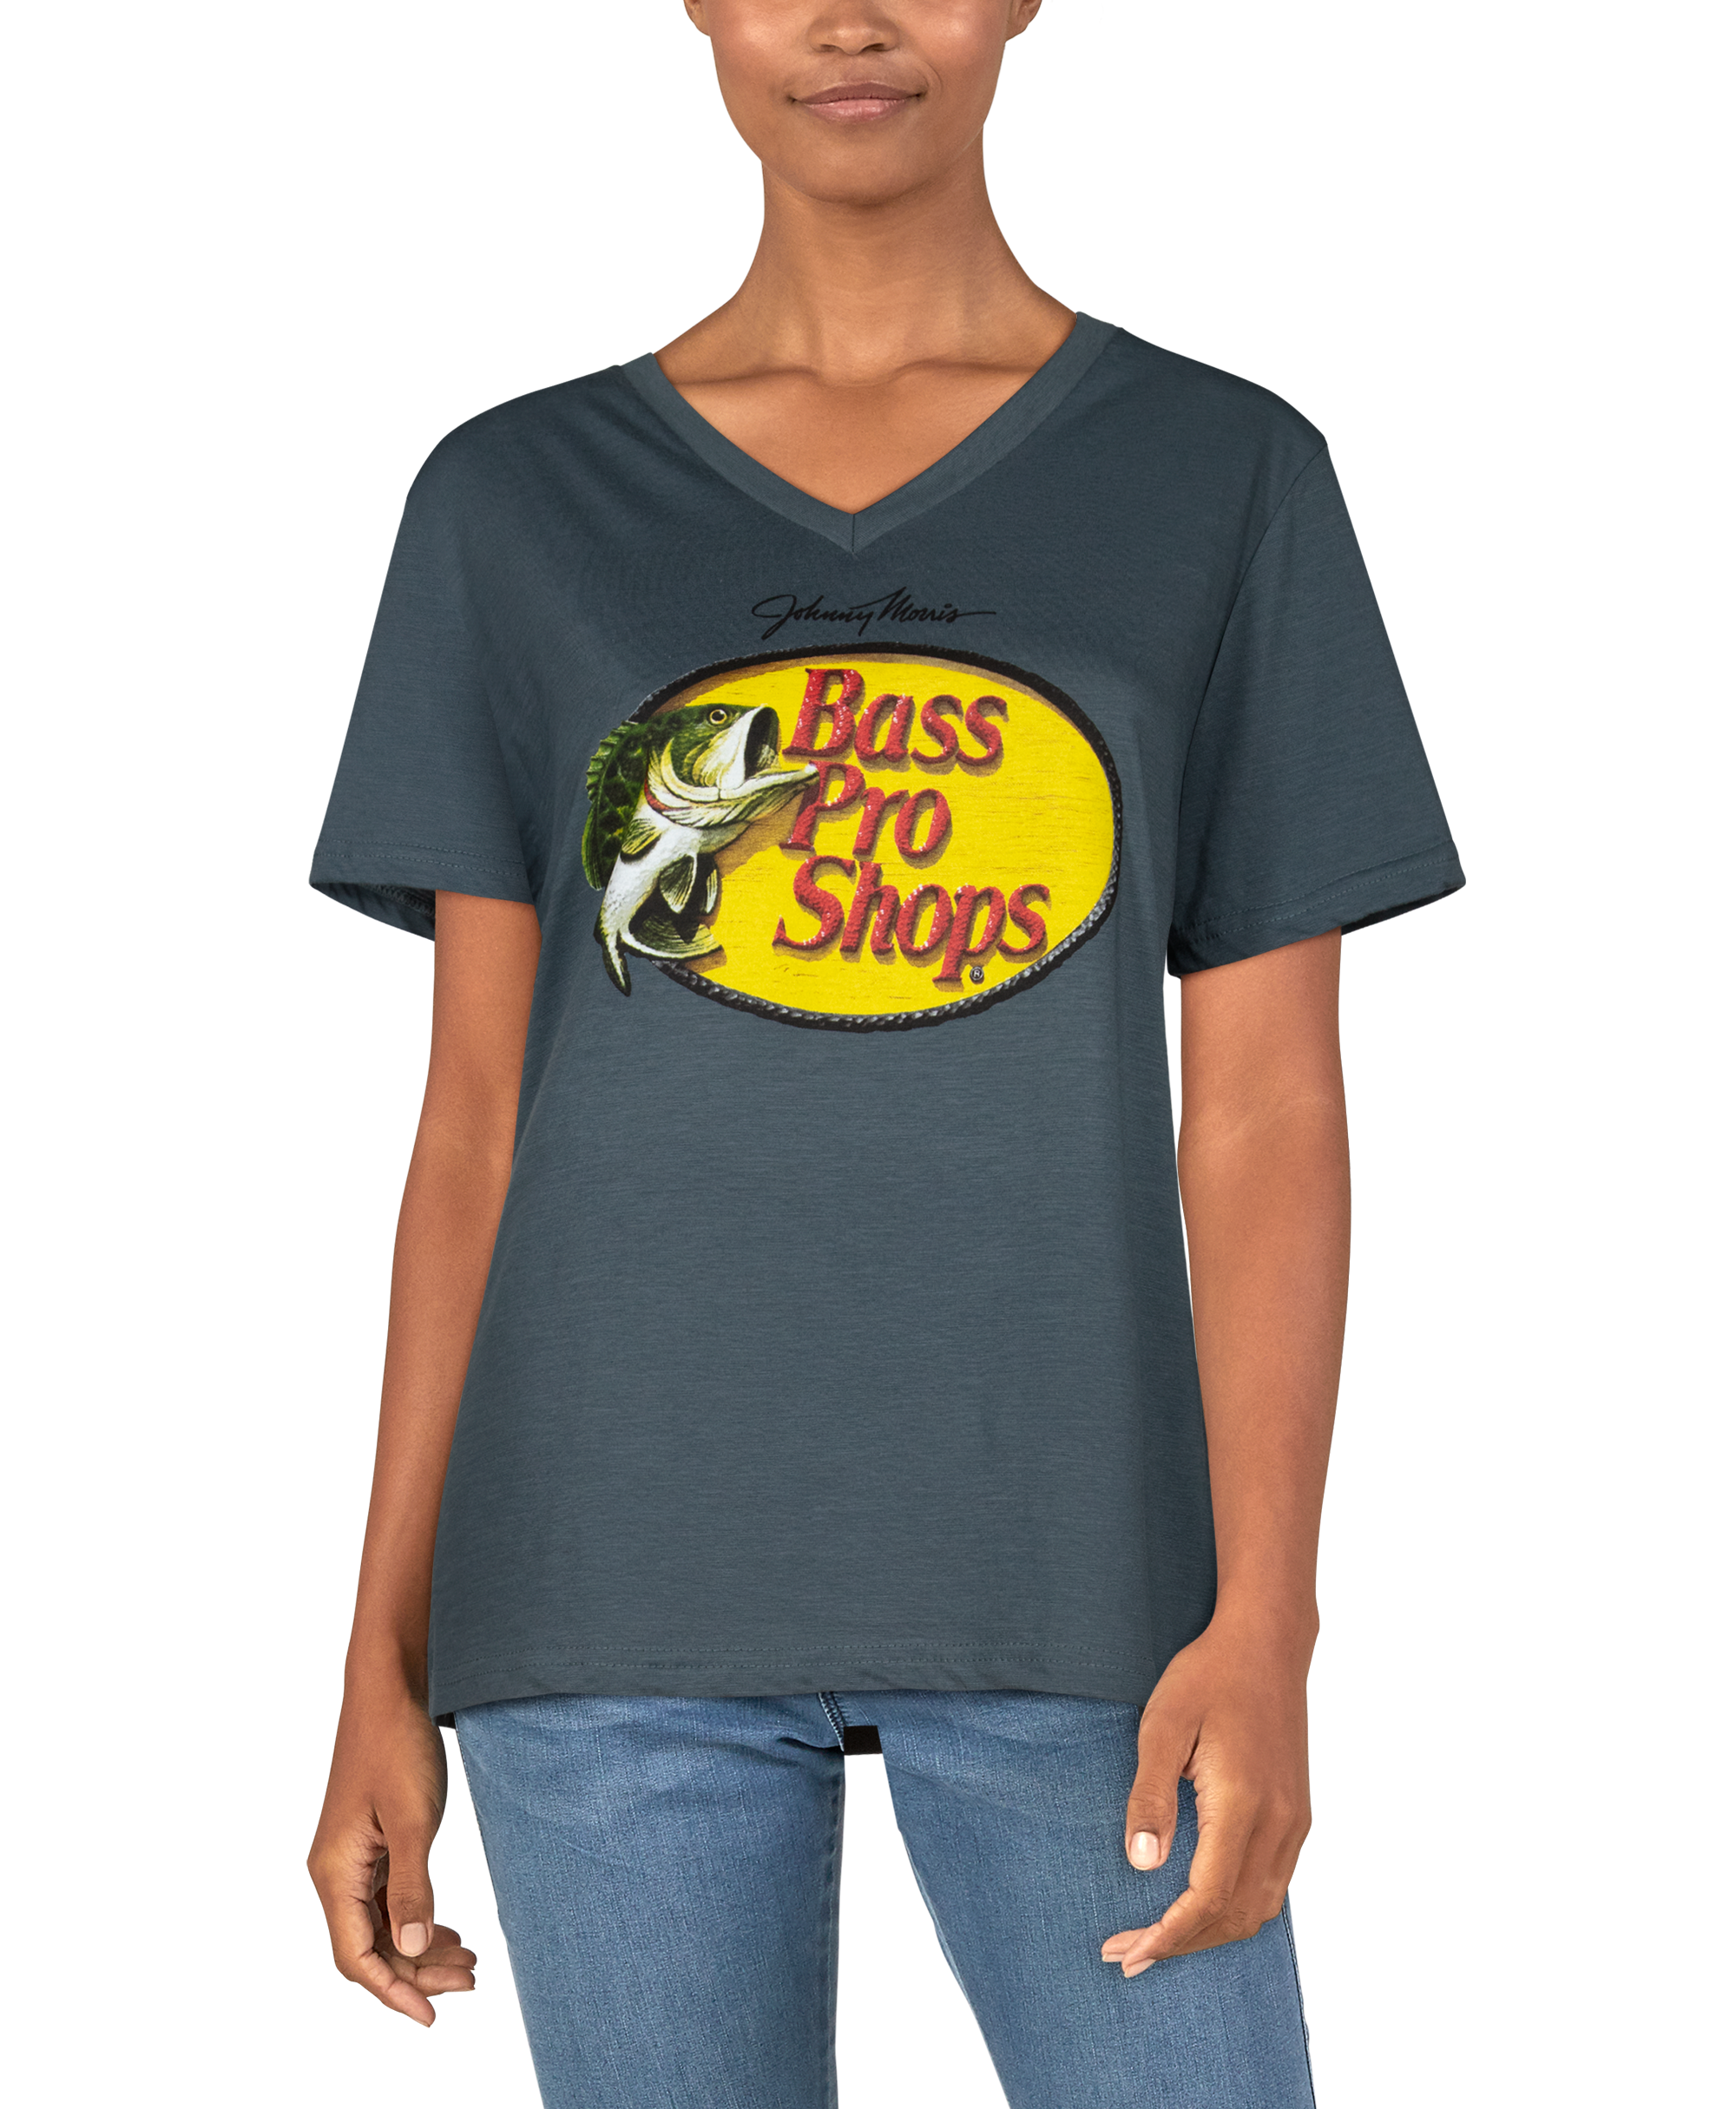 Bass Pro Shops Woodcut Logo V-Neck Short-Sleeve T-Shirt for Ladies - Charcoal - L